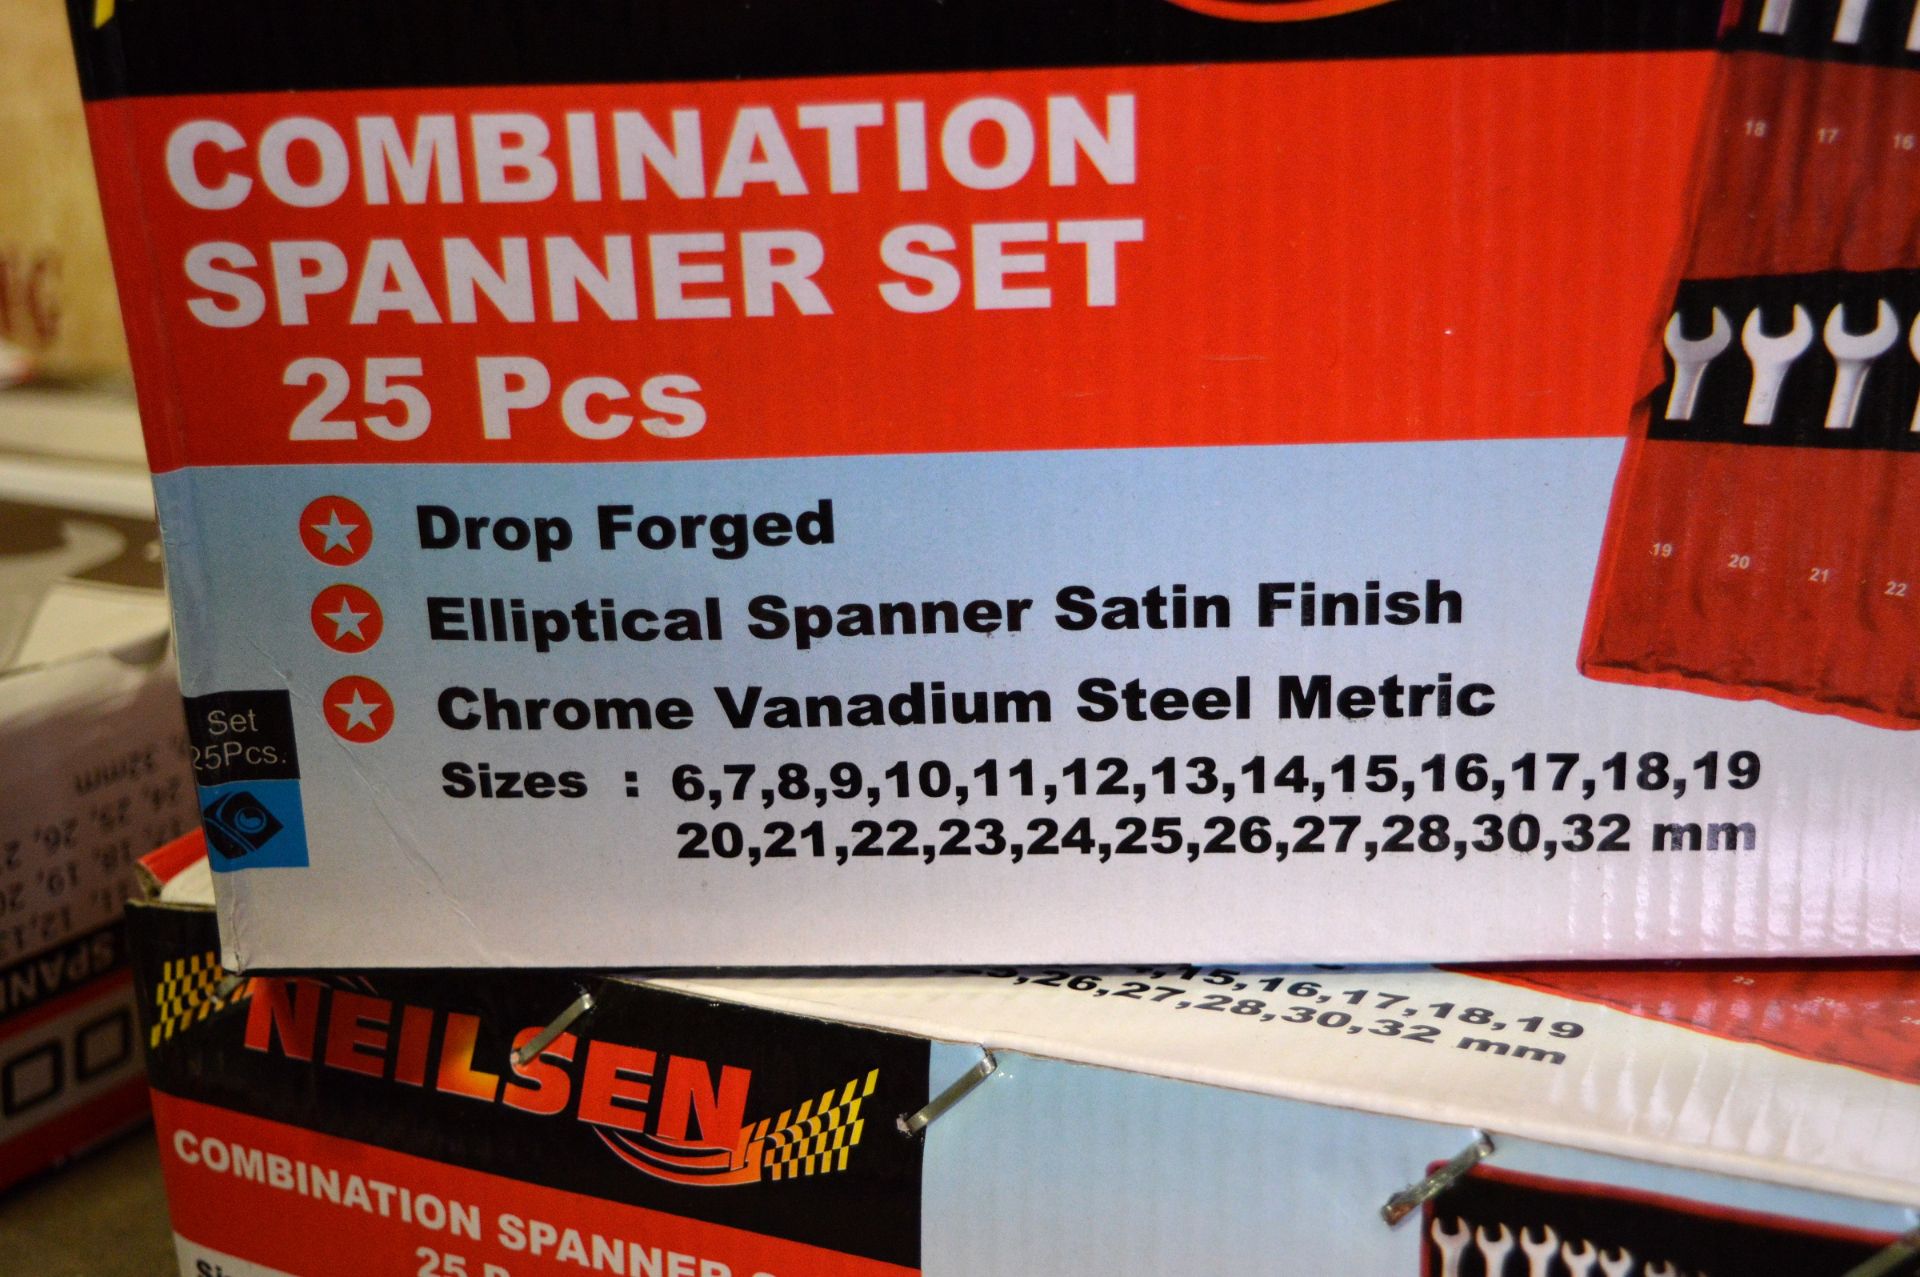 2x Neilsen 25pc Combination Spanner Sets - Image 2 of 2